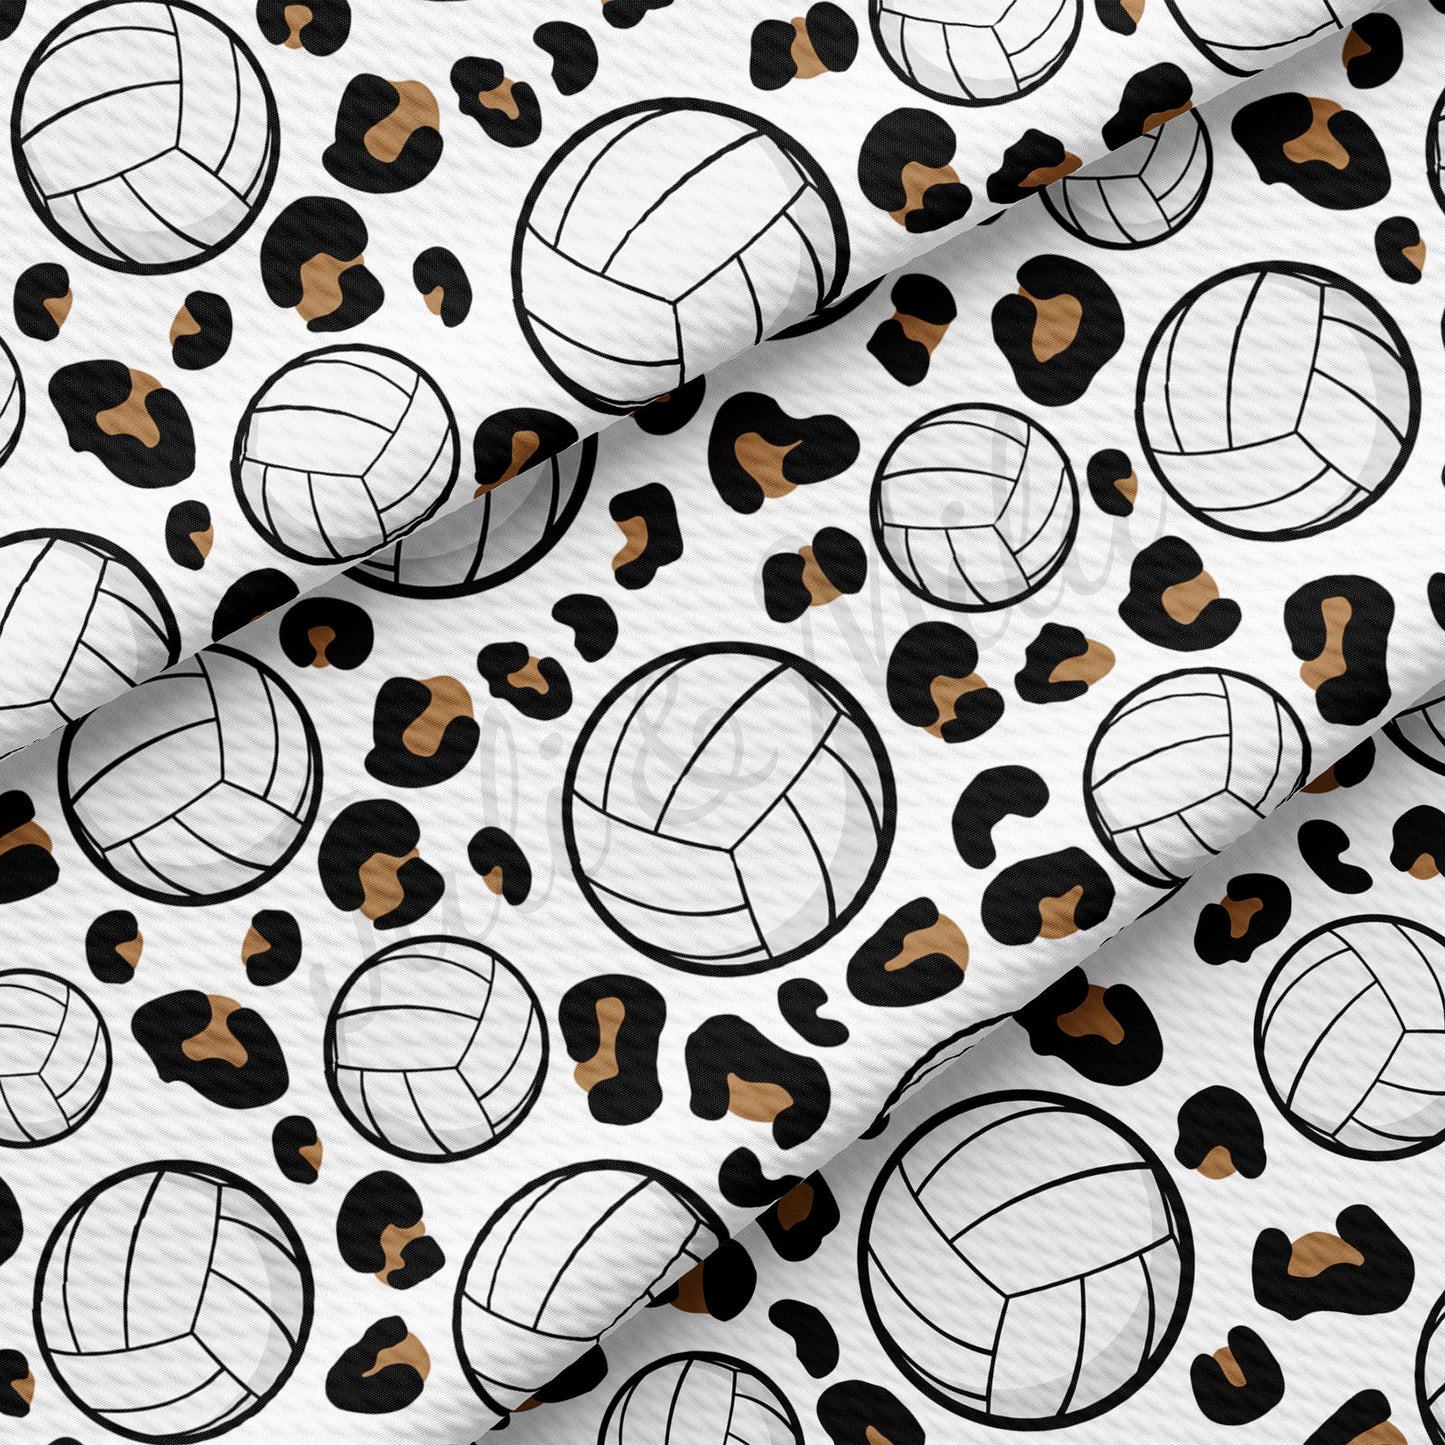 VolleyBall Cheetah Bullet Textured Fabric  AA1012